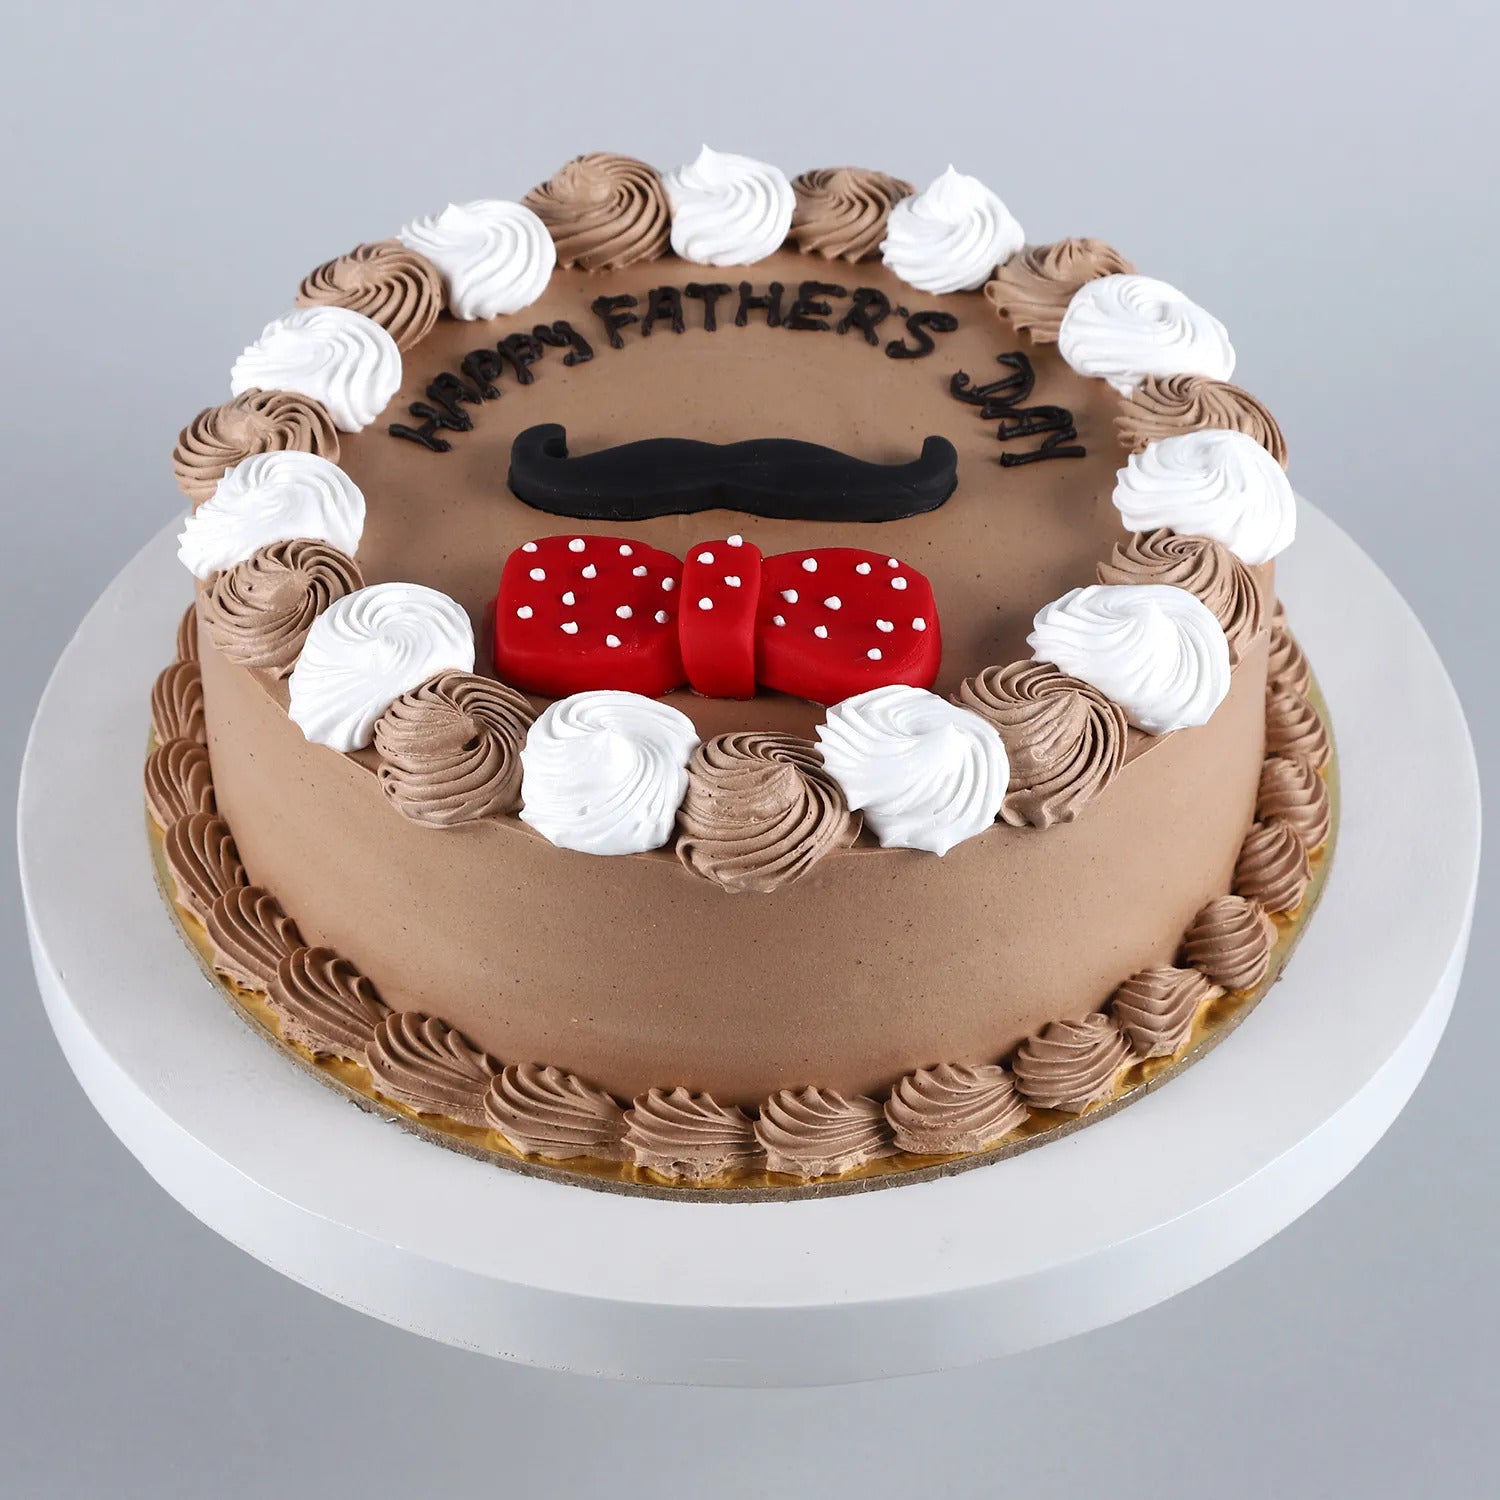 Shop for Fresh Childrens Day Black Forest Chocolate Cake online - Vadodara